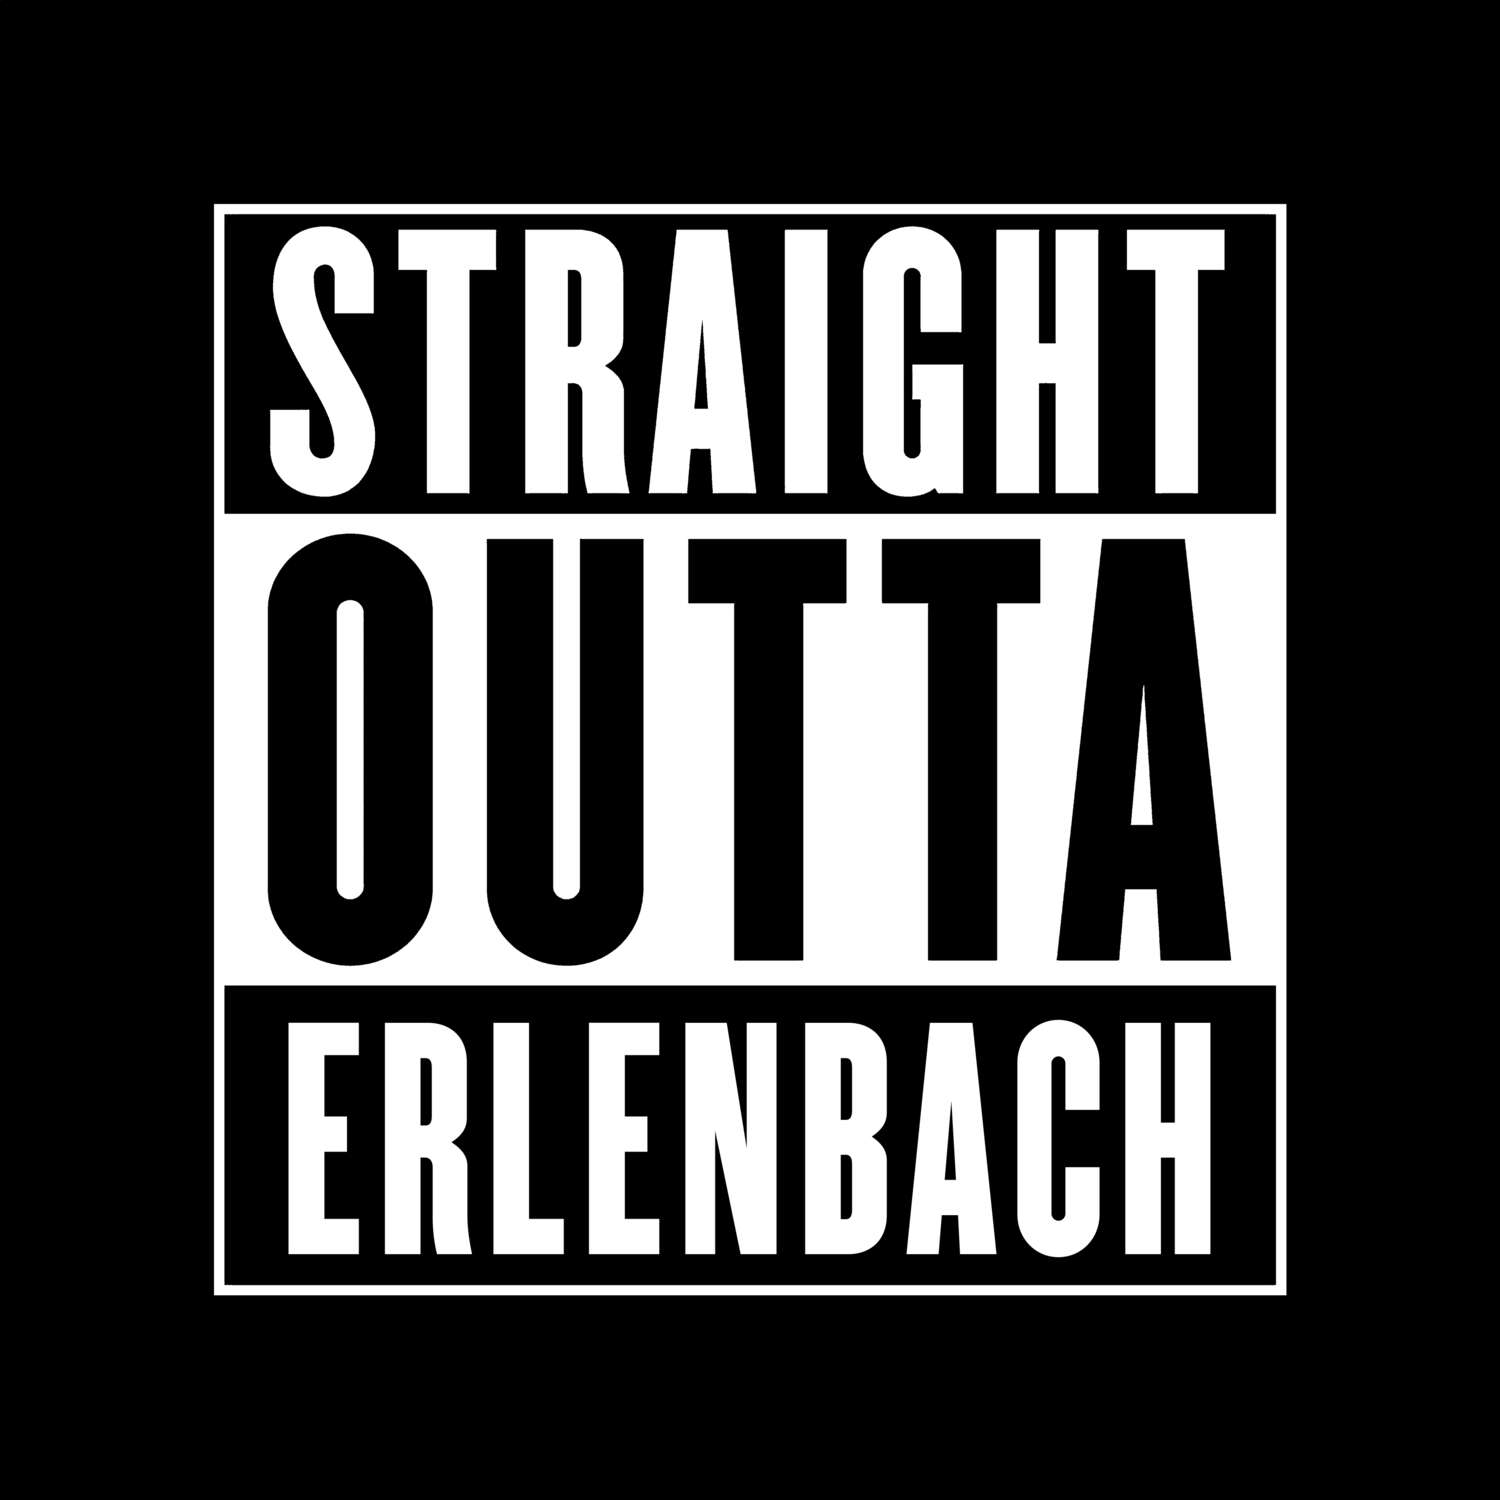 Erlenbach T-Shirt »Straight Outta«